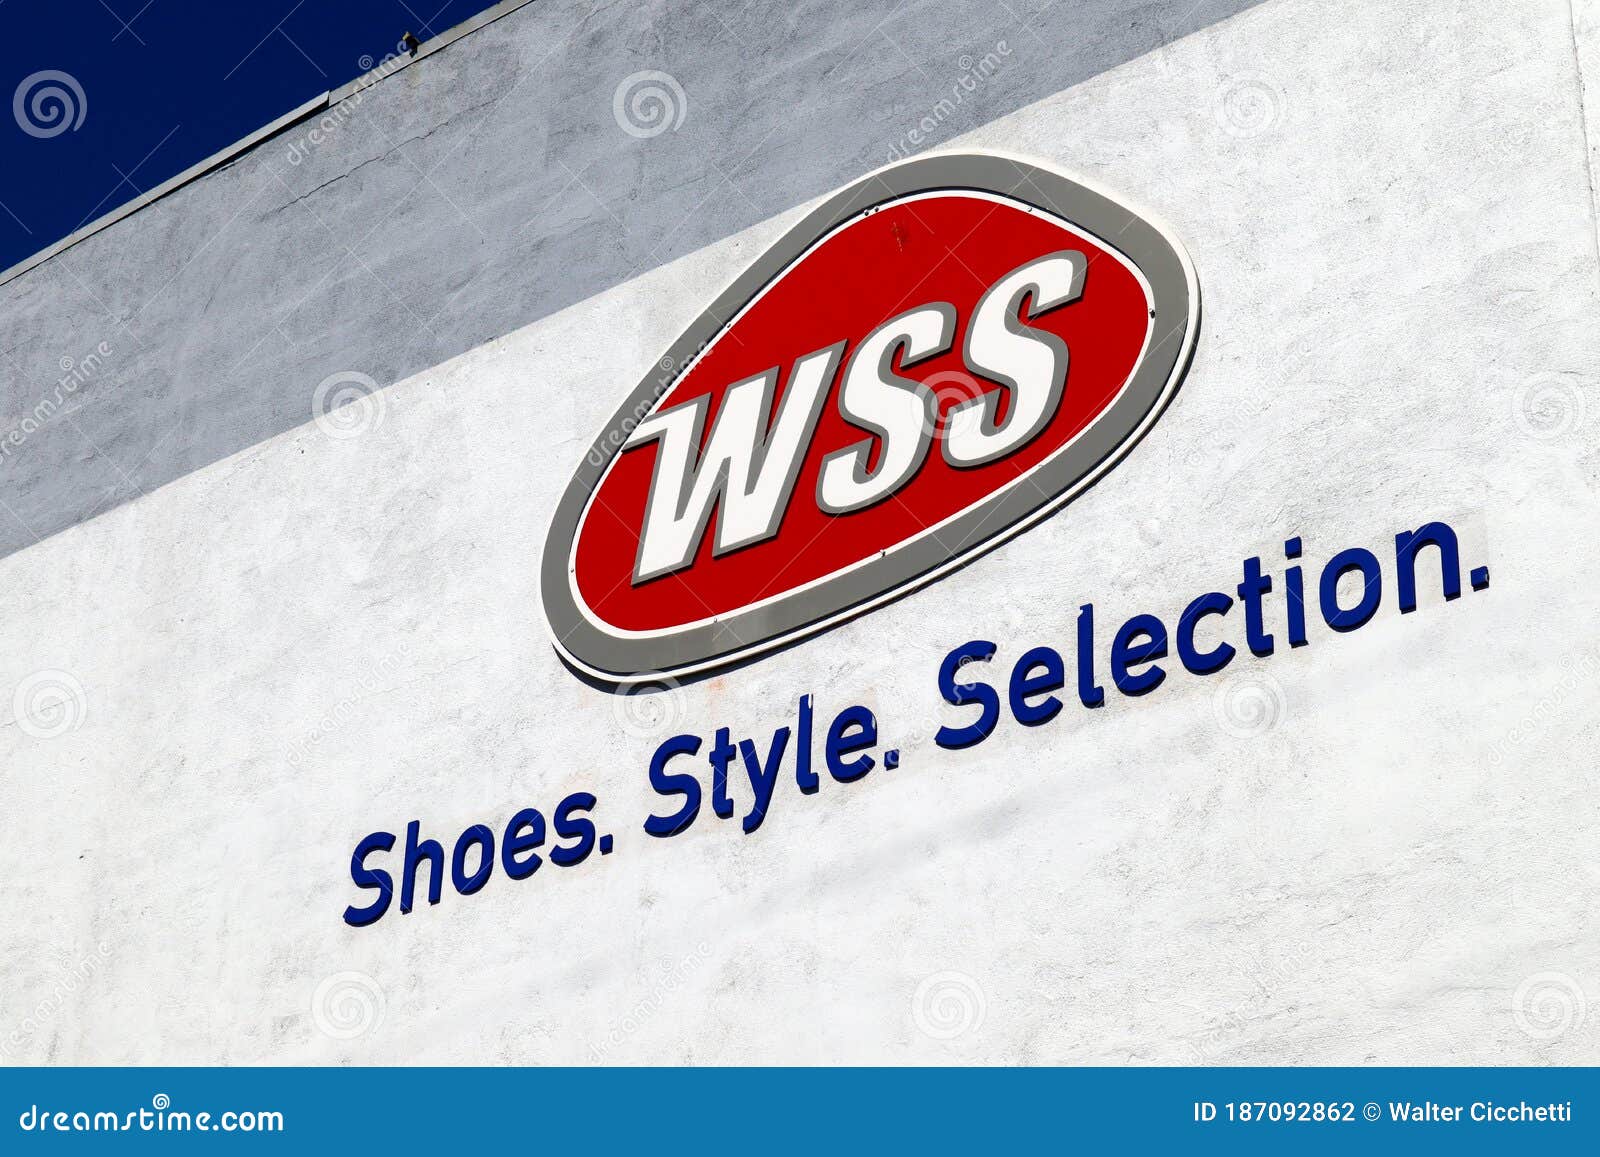 wss warehouse shoe sale